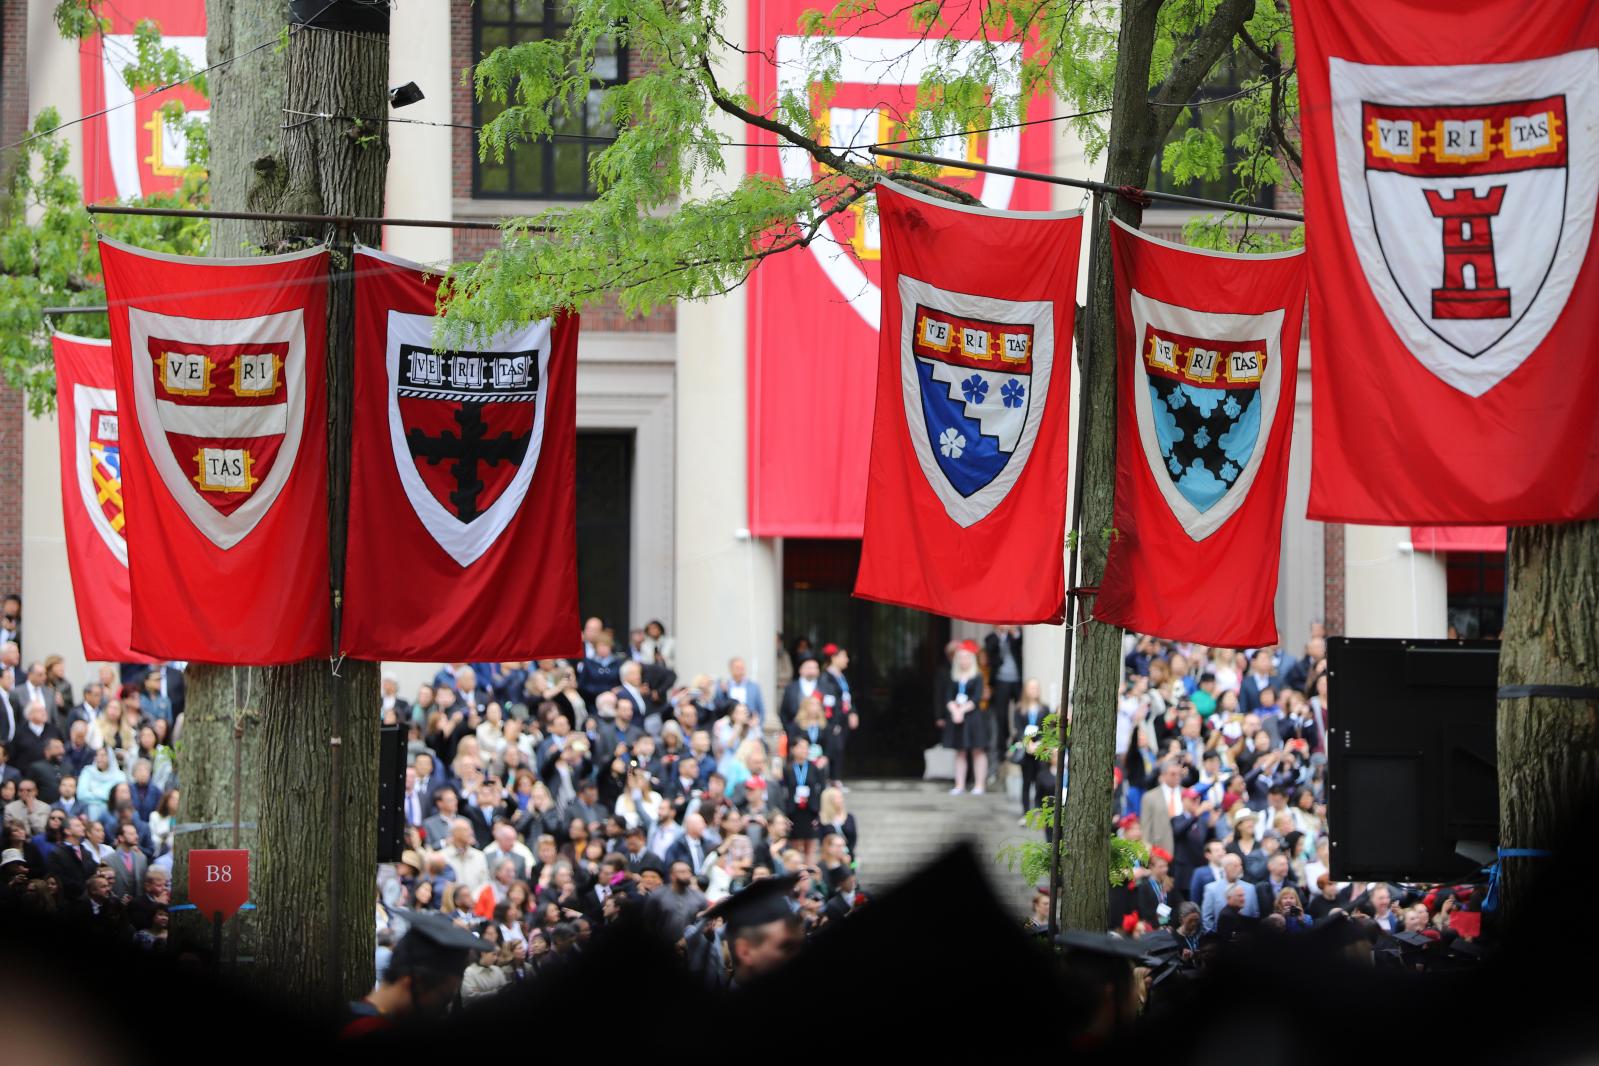 Harvard Commencement 2019 - 